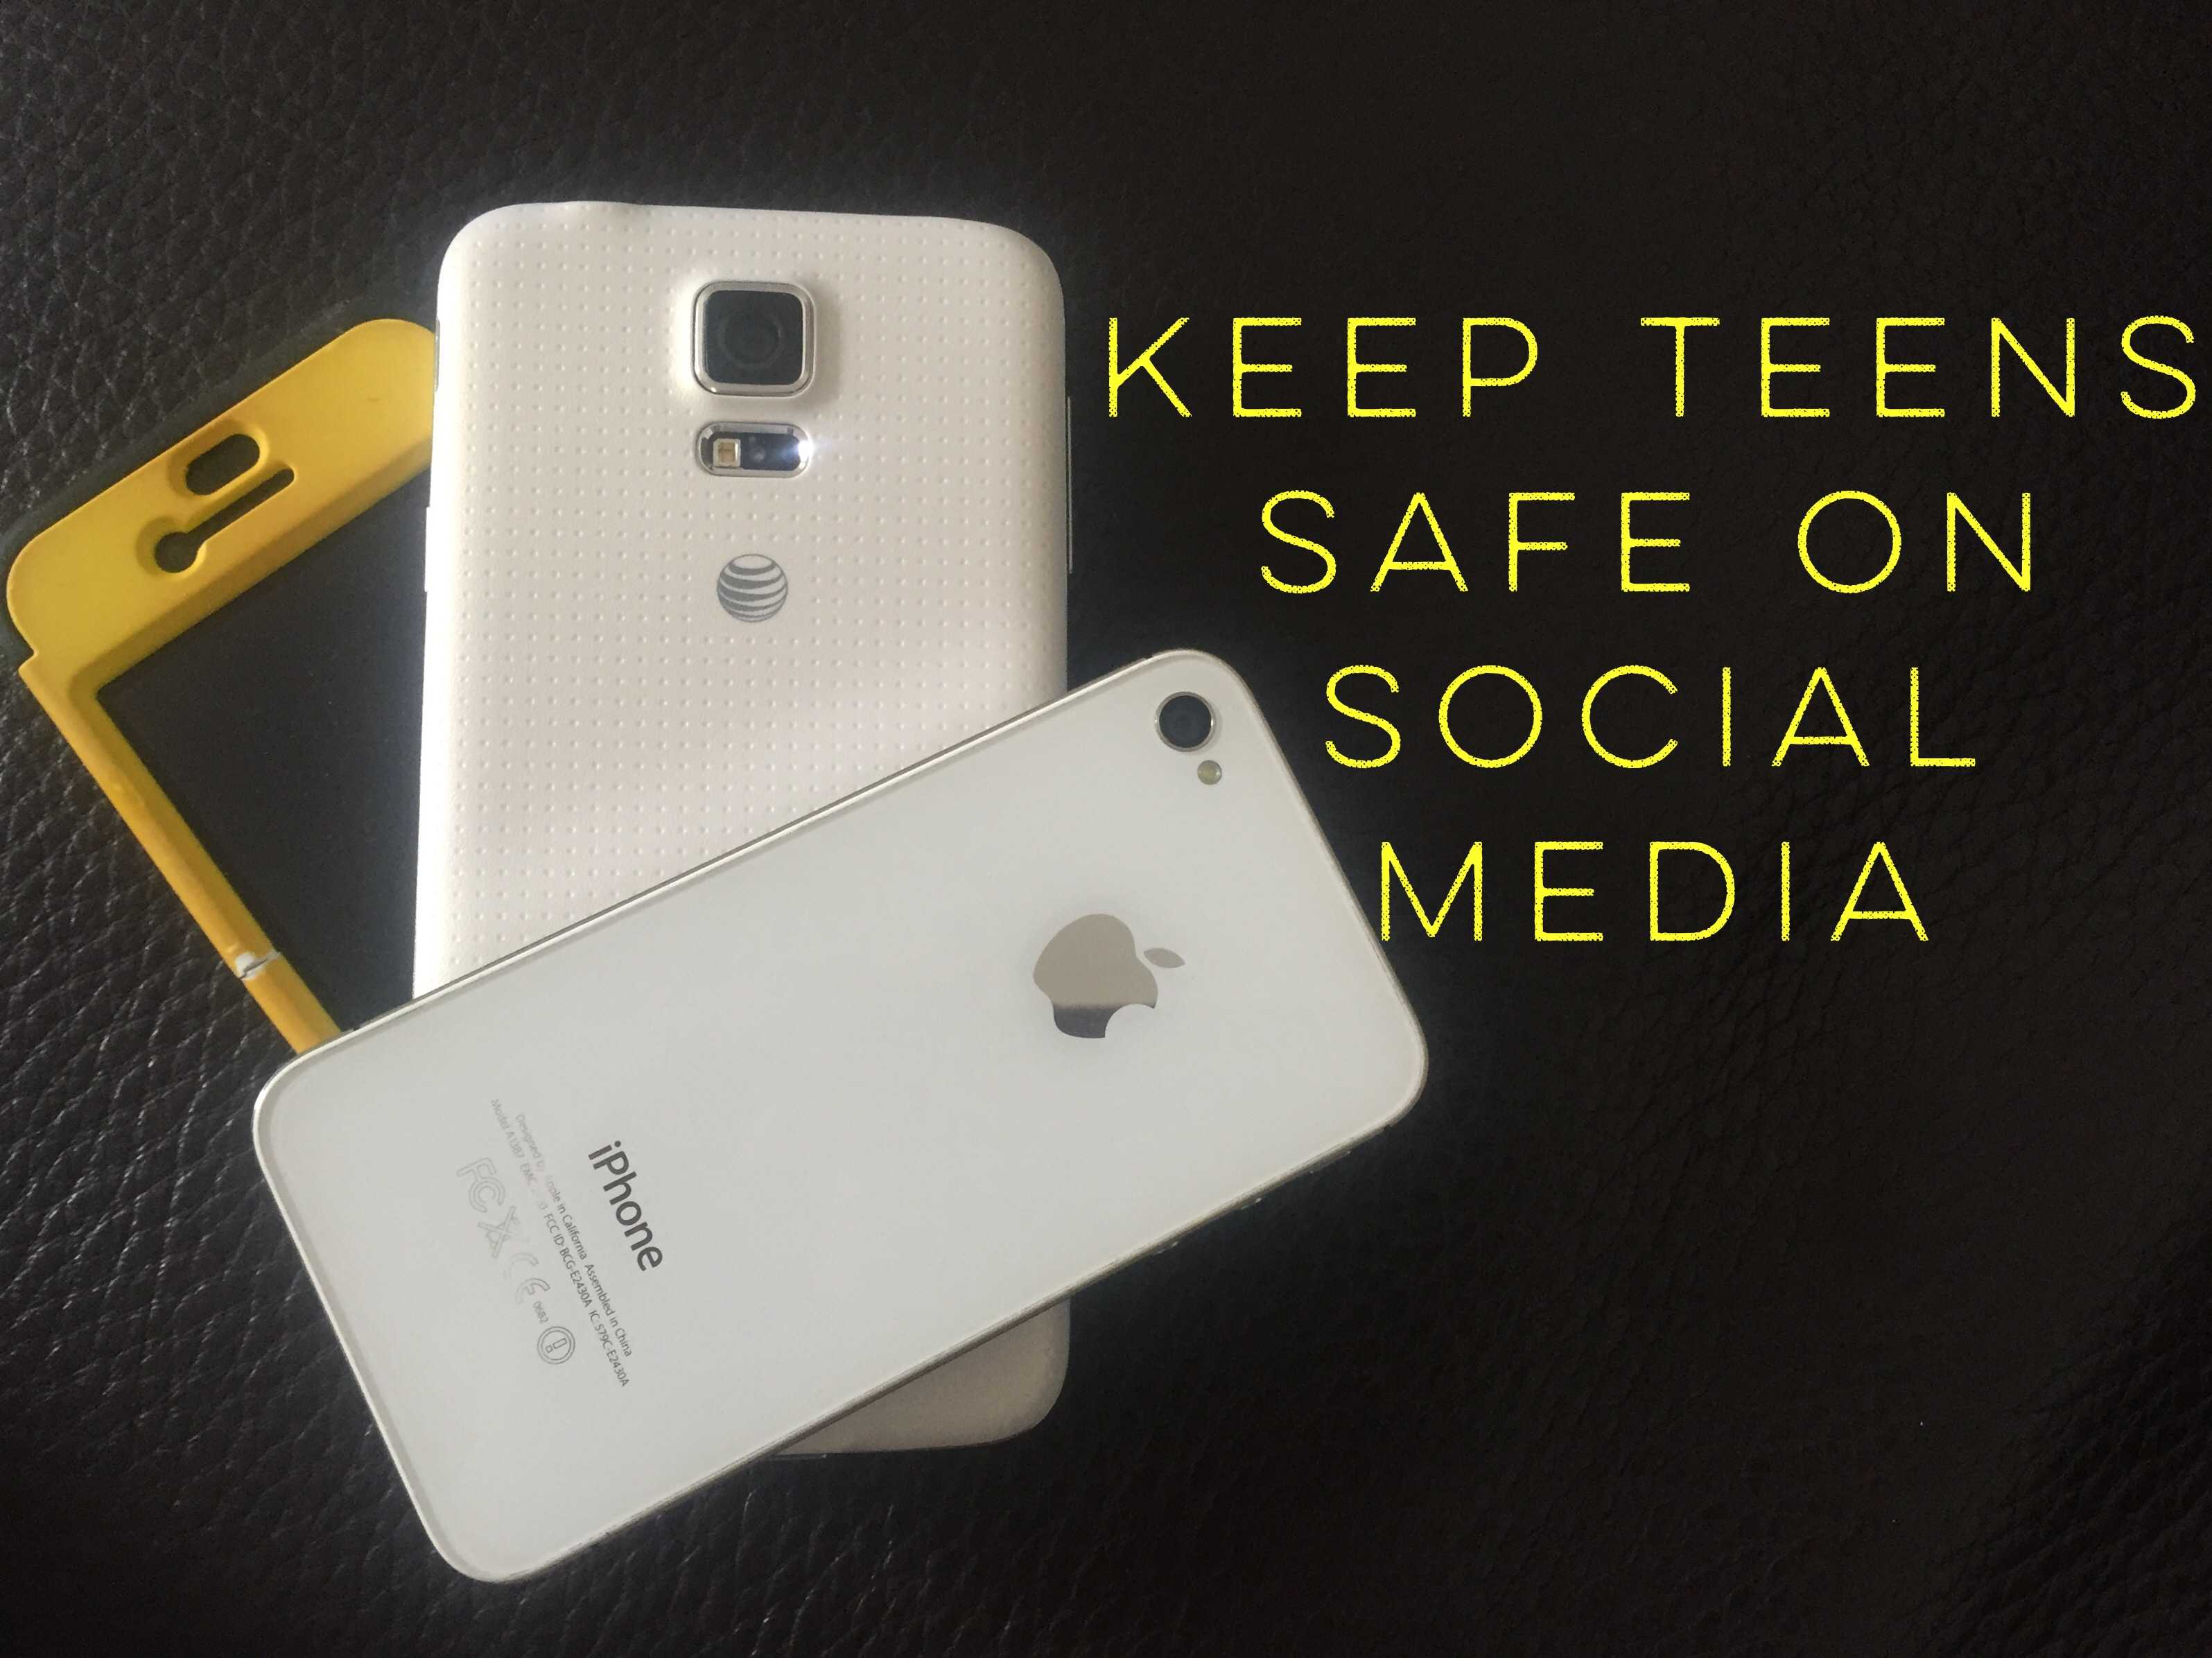 How to keep teens safe on social media